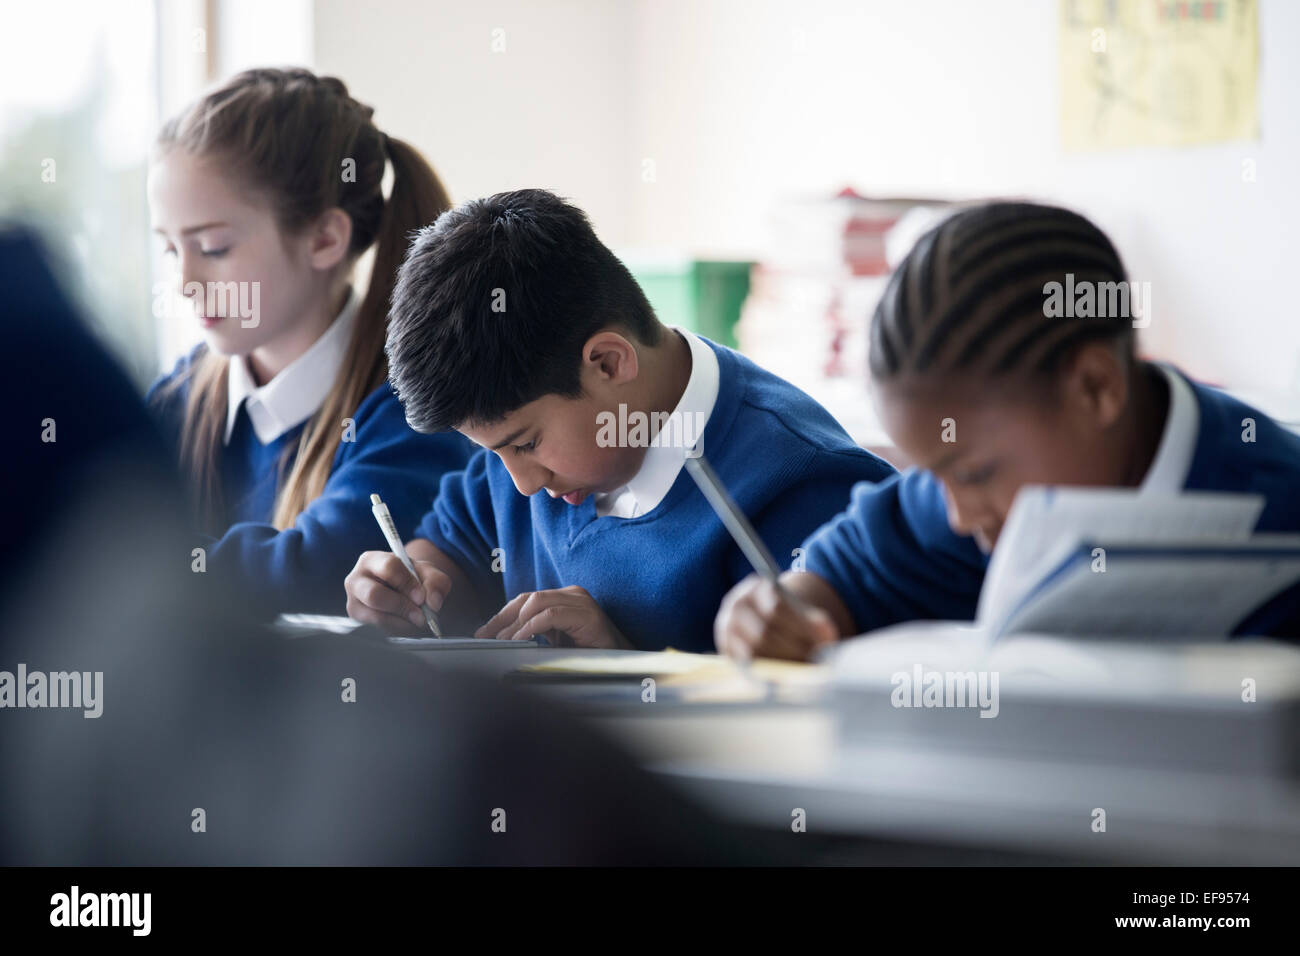 Elementary school children writing in classroom Stock Photo